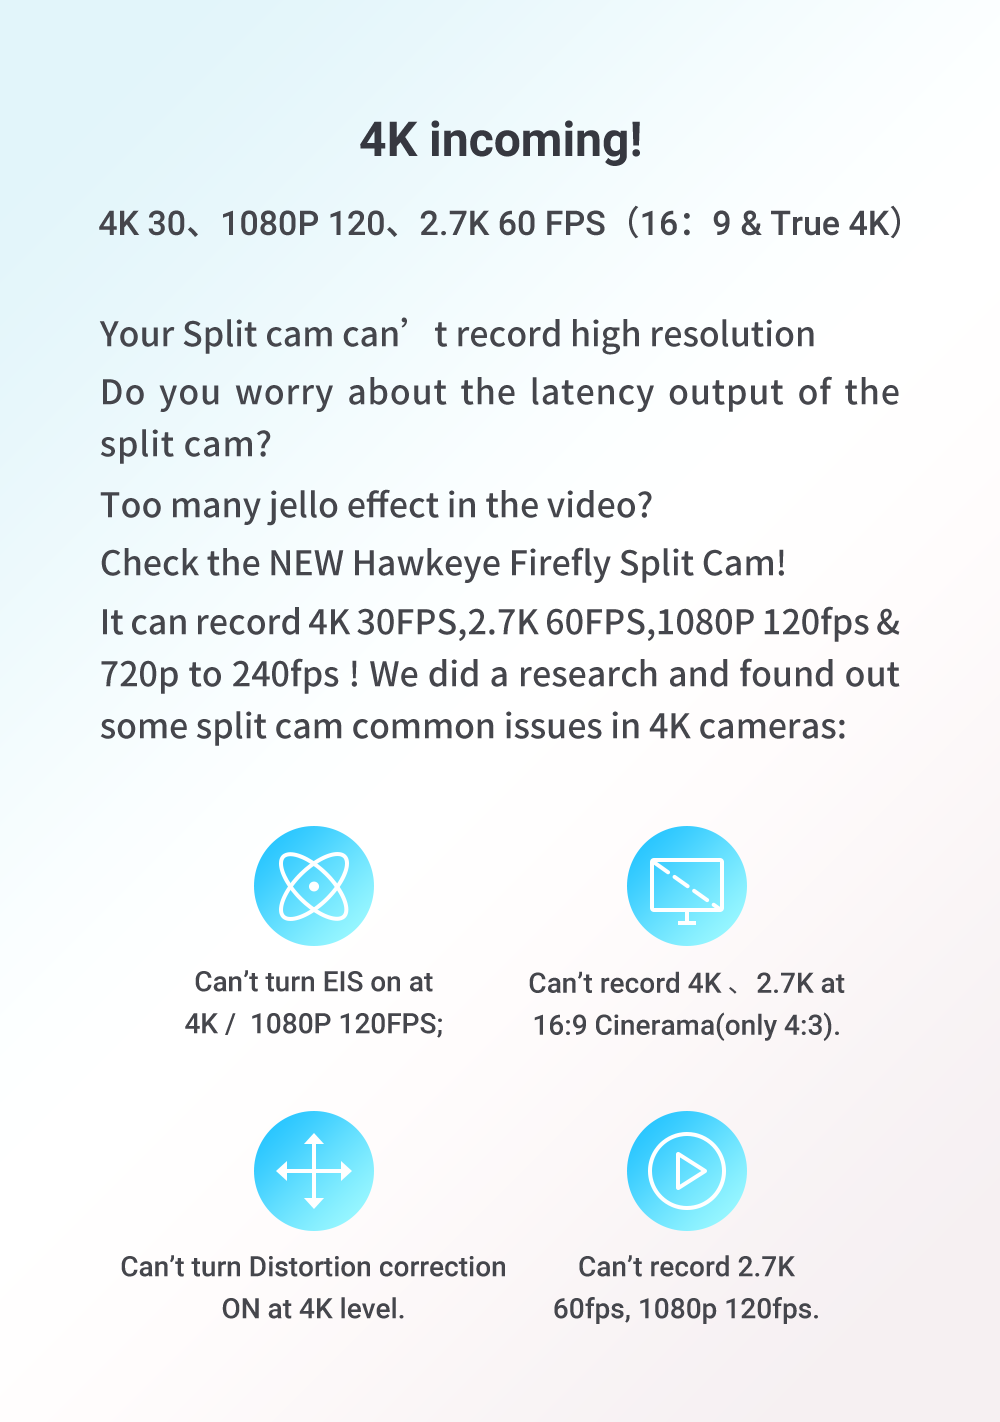 Hawkeye Firefly Split 4K 160 度 HD 録画 DVR ミニ FPV カメラ